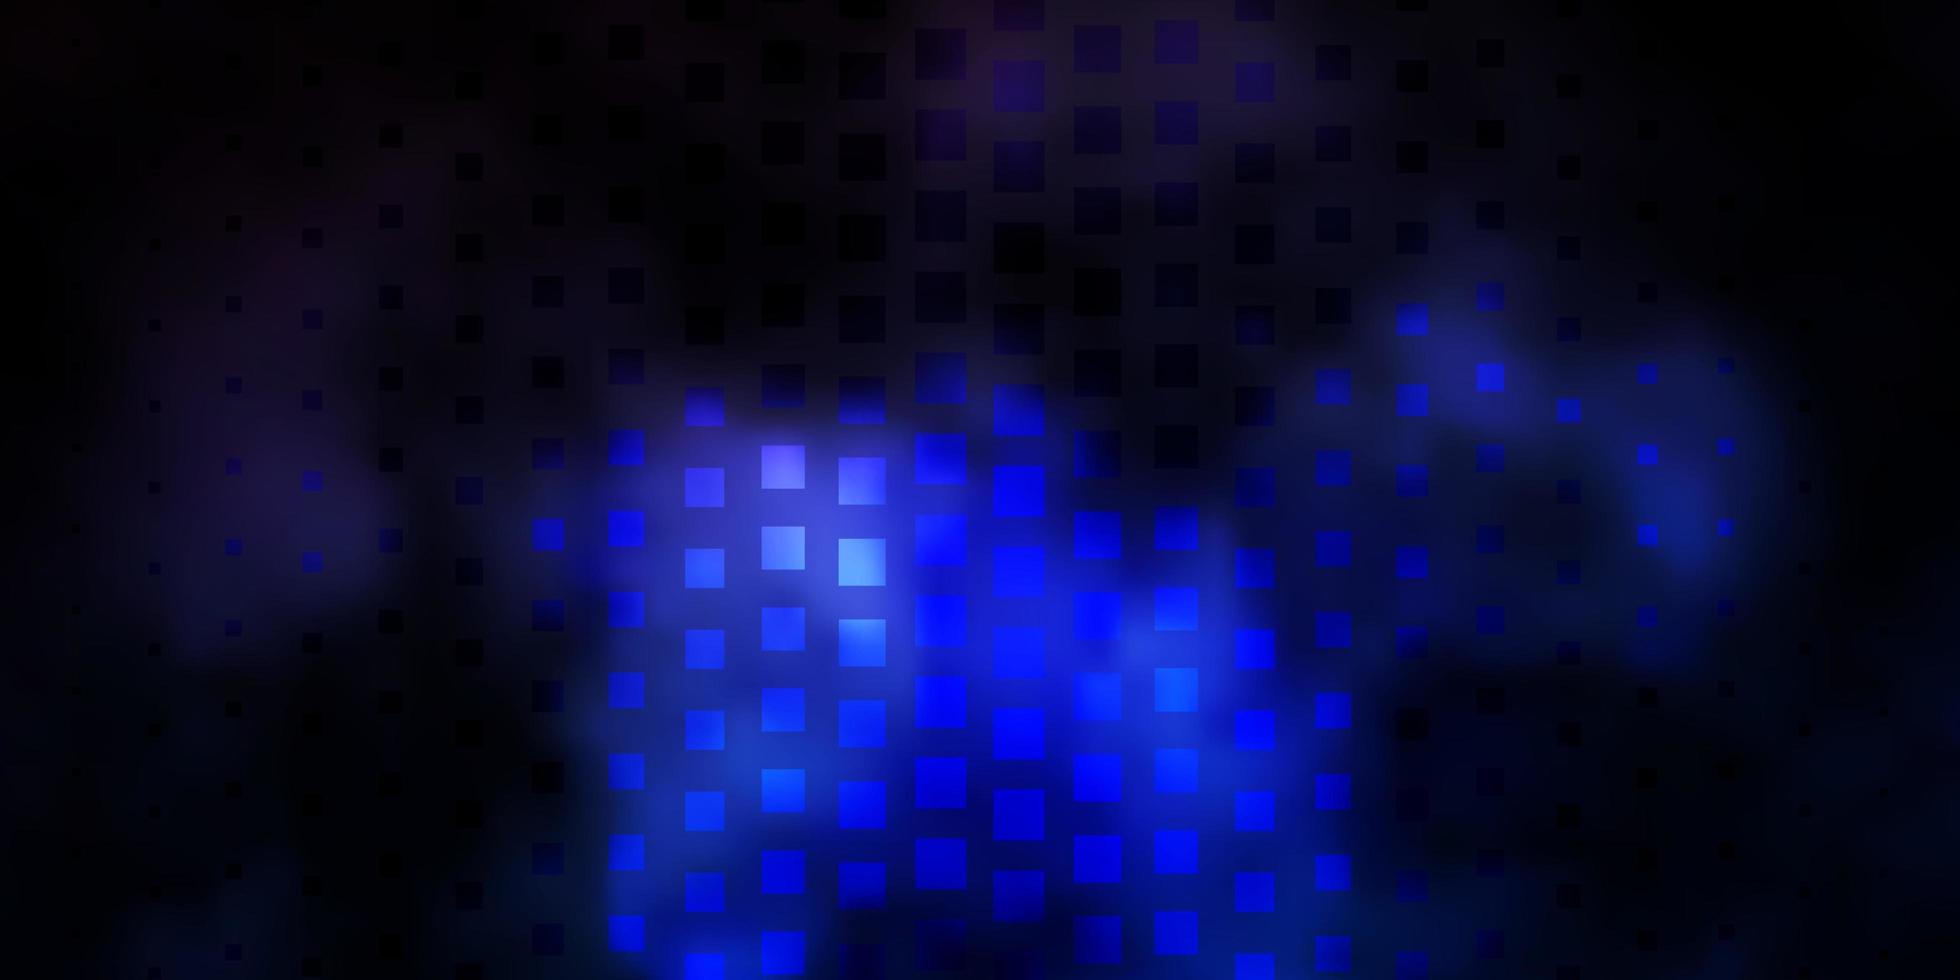 Dark BLUE vector texture in rectangular style